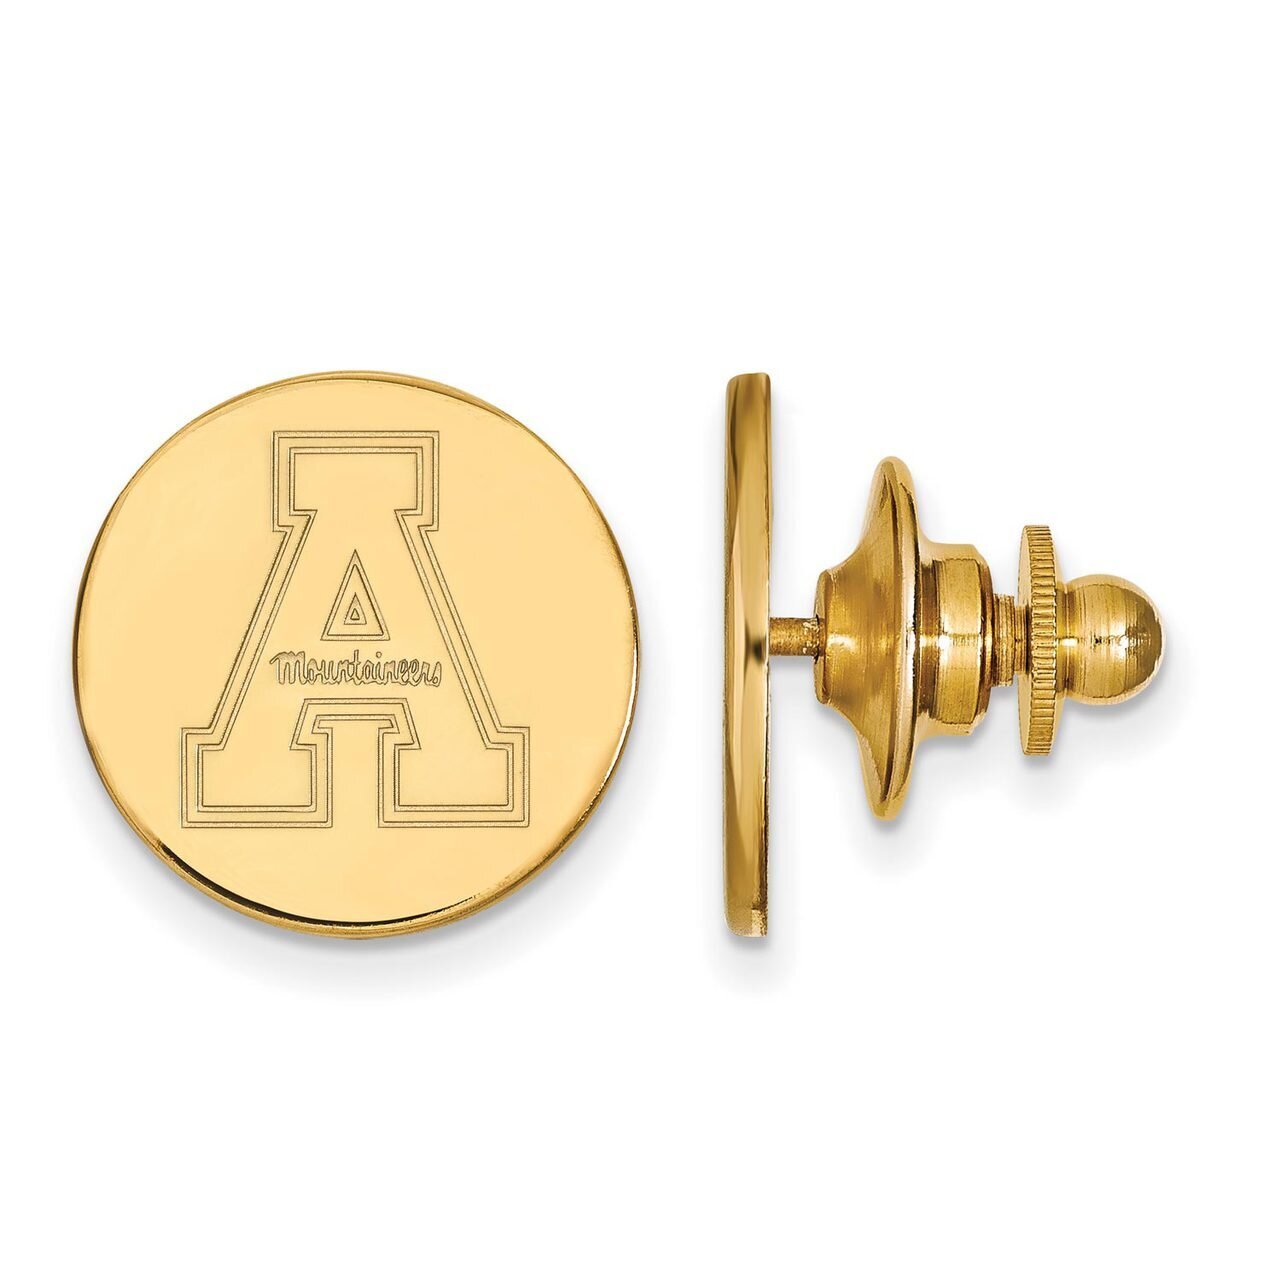 Appalachian State University Lapel Pin Gold-plated Silver GP009APS